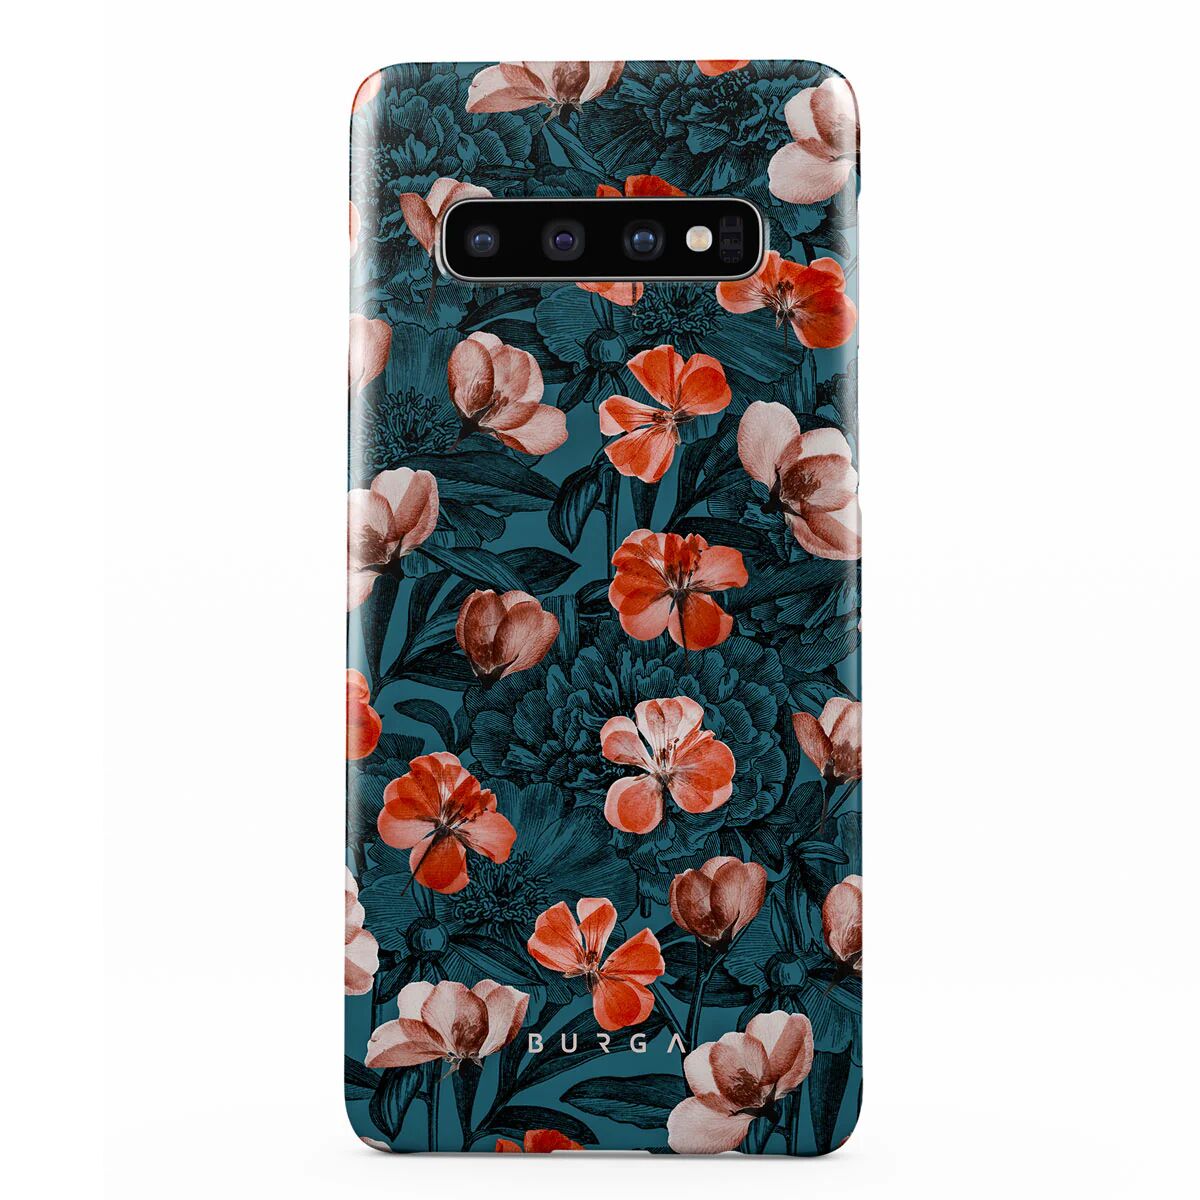 BURGA No Rain No Flowers - Samsung Galaxy S10 Plus Case